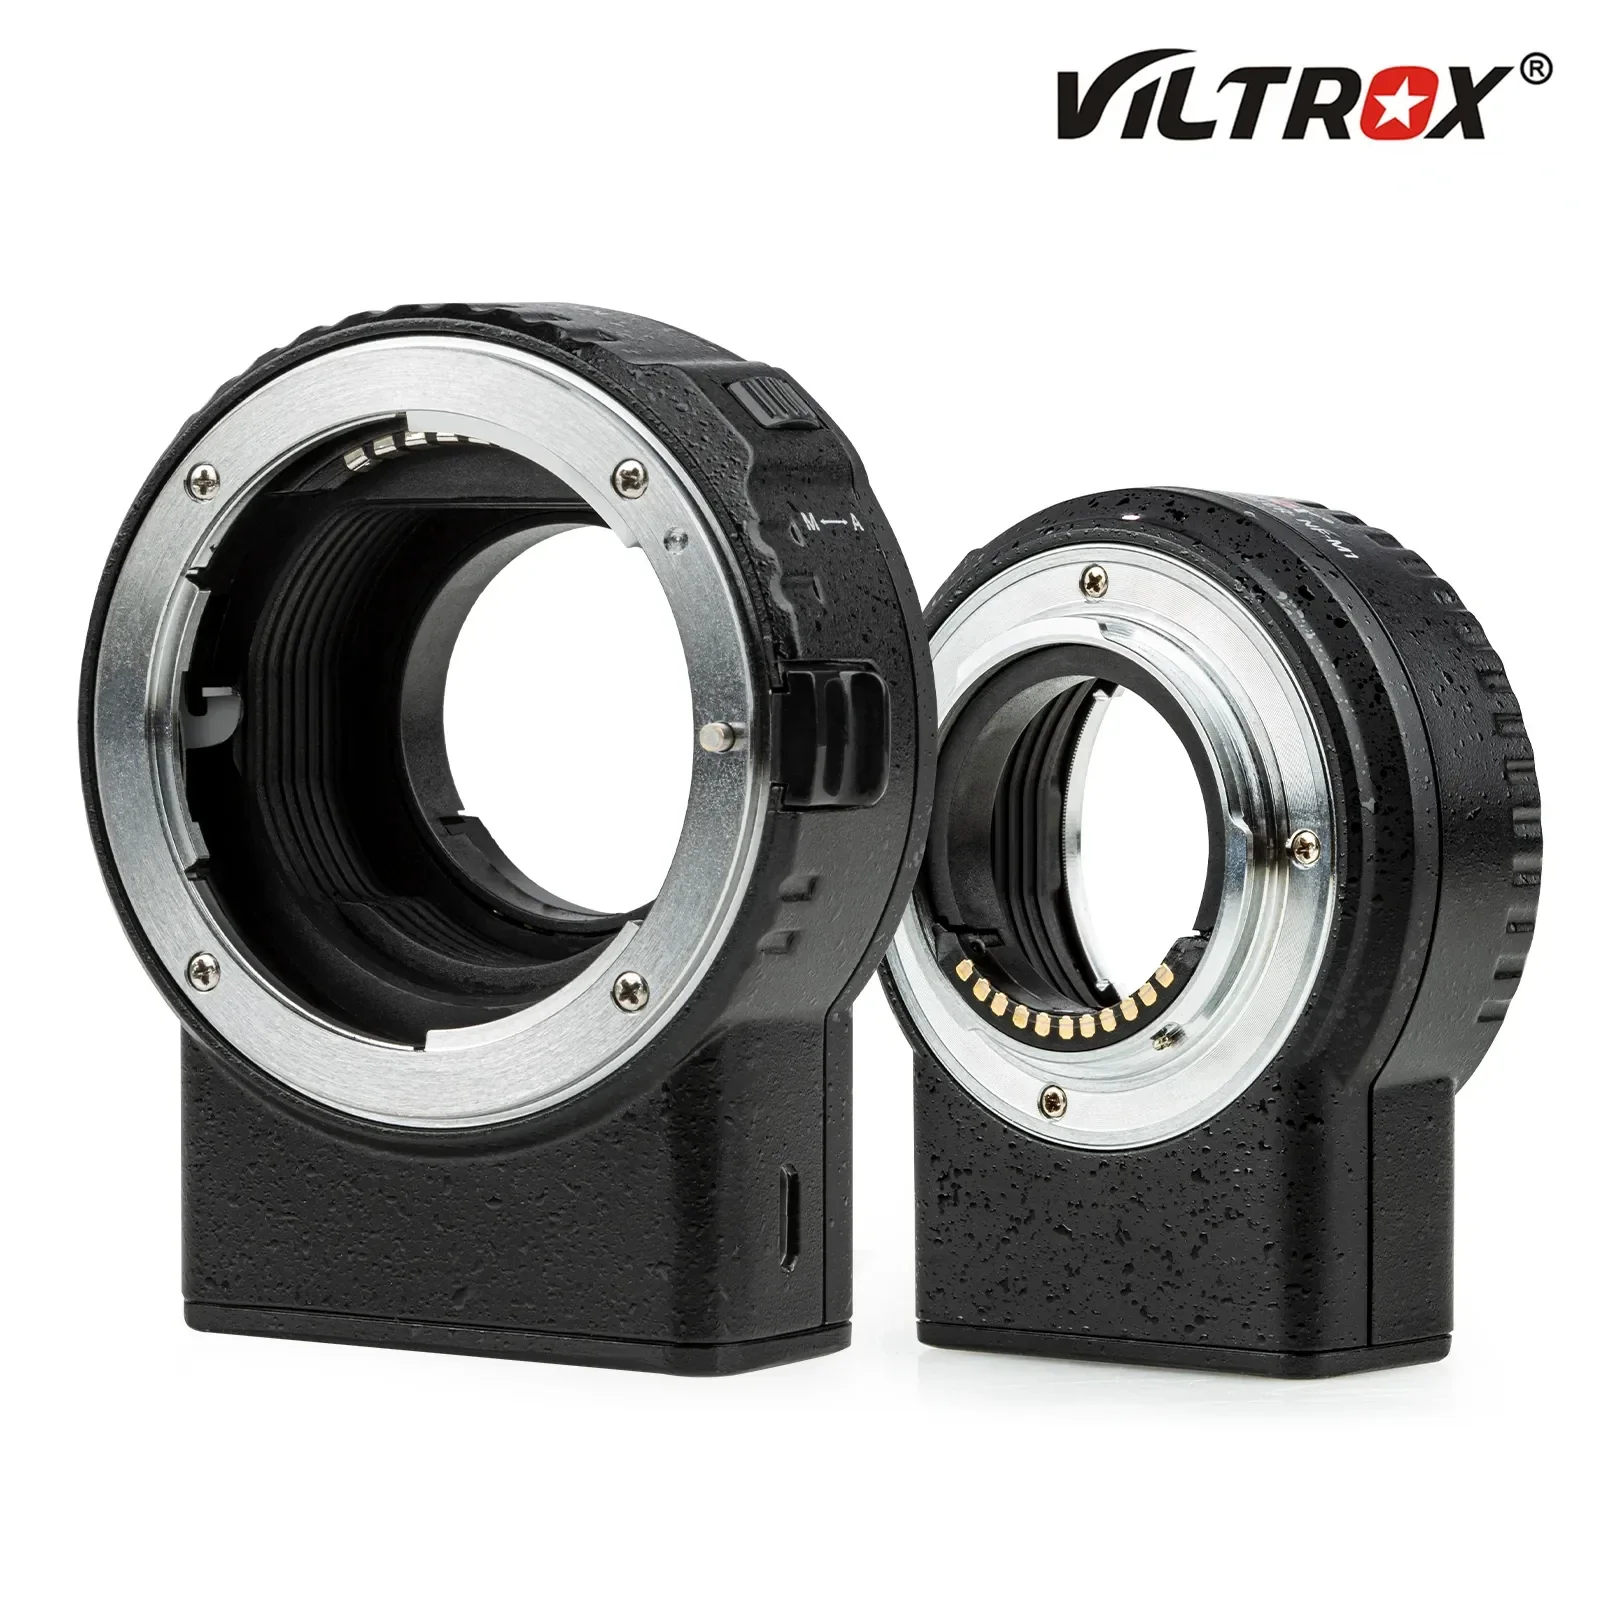 

Viltrox NF-M1 Auto Focus Lens Adapter For Nikon F Lens To M4/3 MFT Camera Panasonic GH4 GH5 Olympus E-M10 III E-M5 BMCC 4K